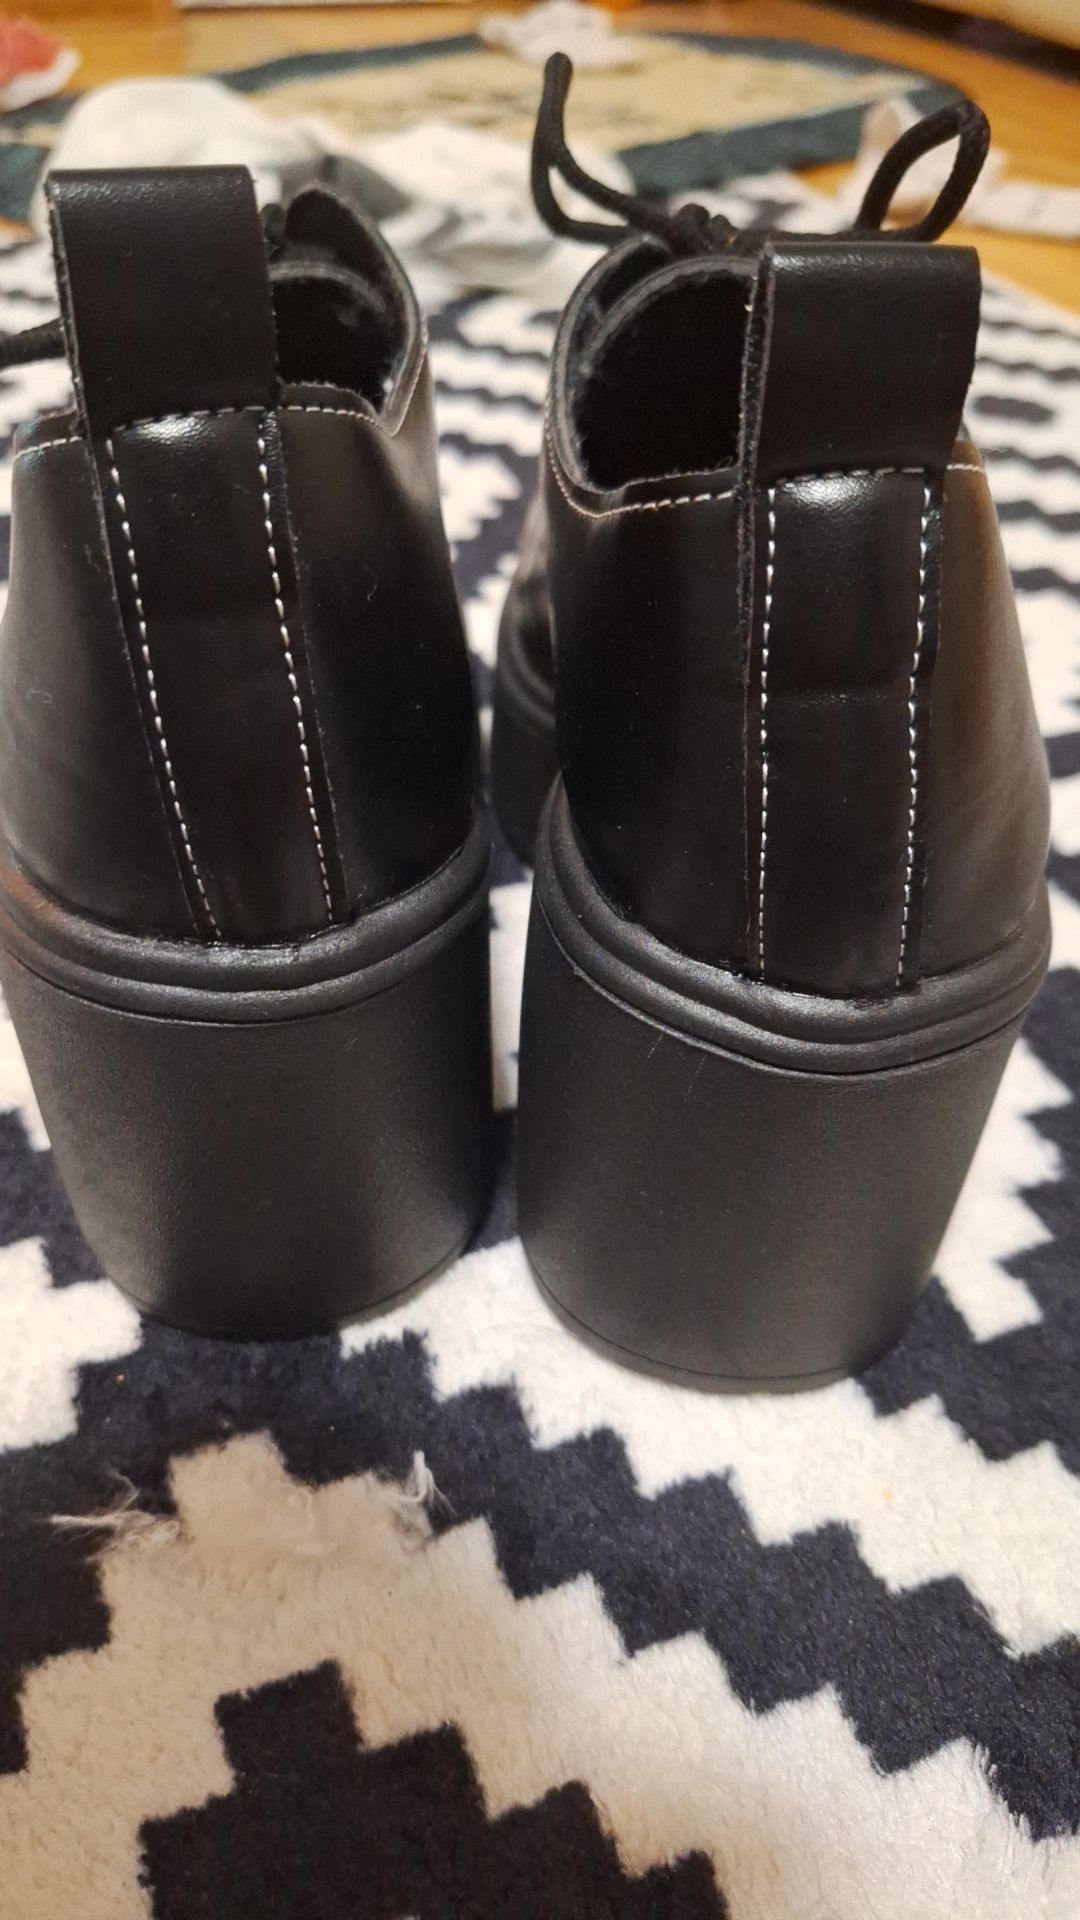 Papuci/Pumps Oxford eleganti pentru femei, pantofi cu toc gros, cu pla